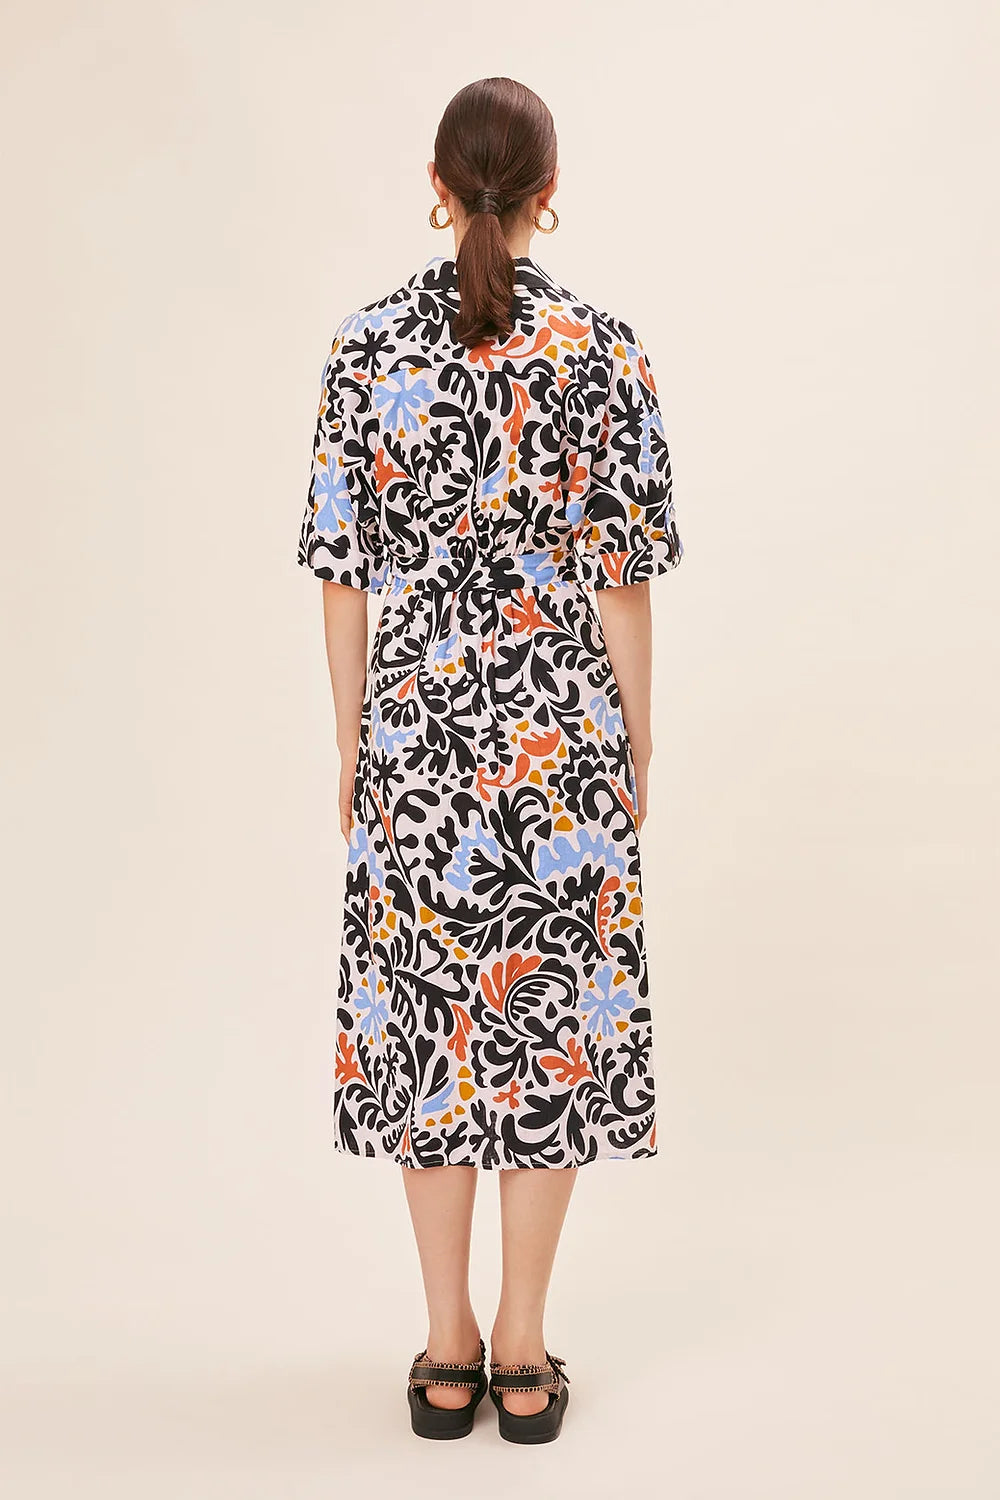 Suncoo - Carina Print Dress